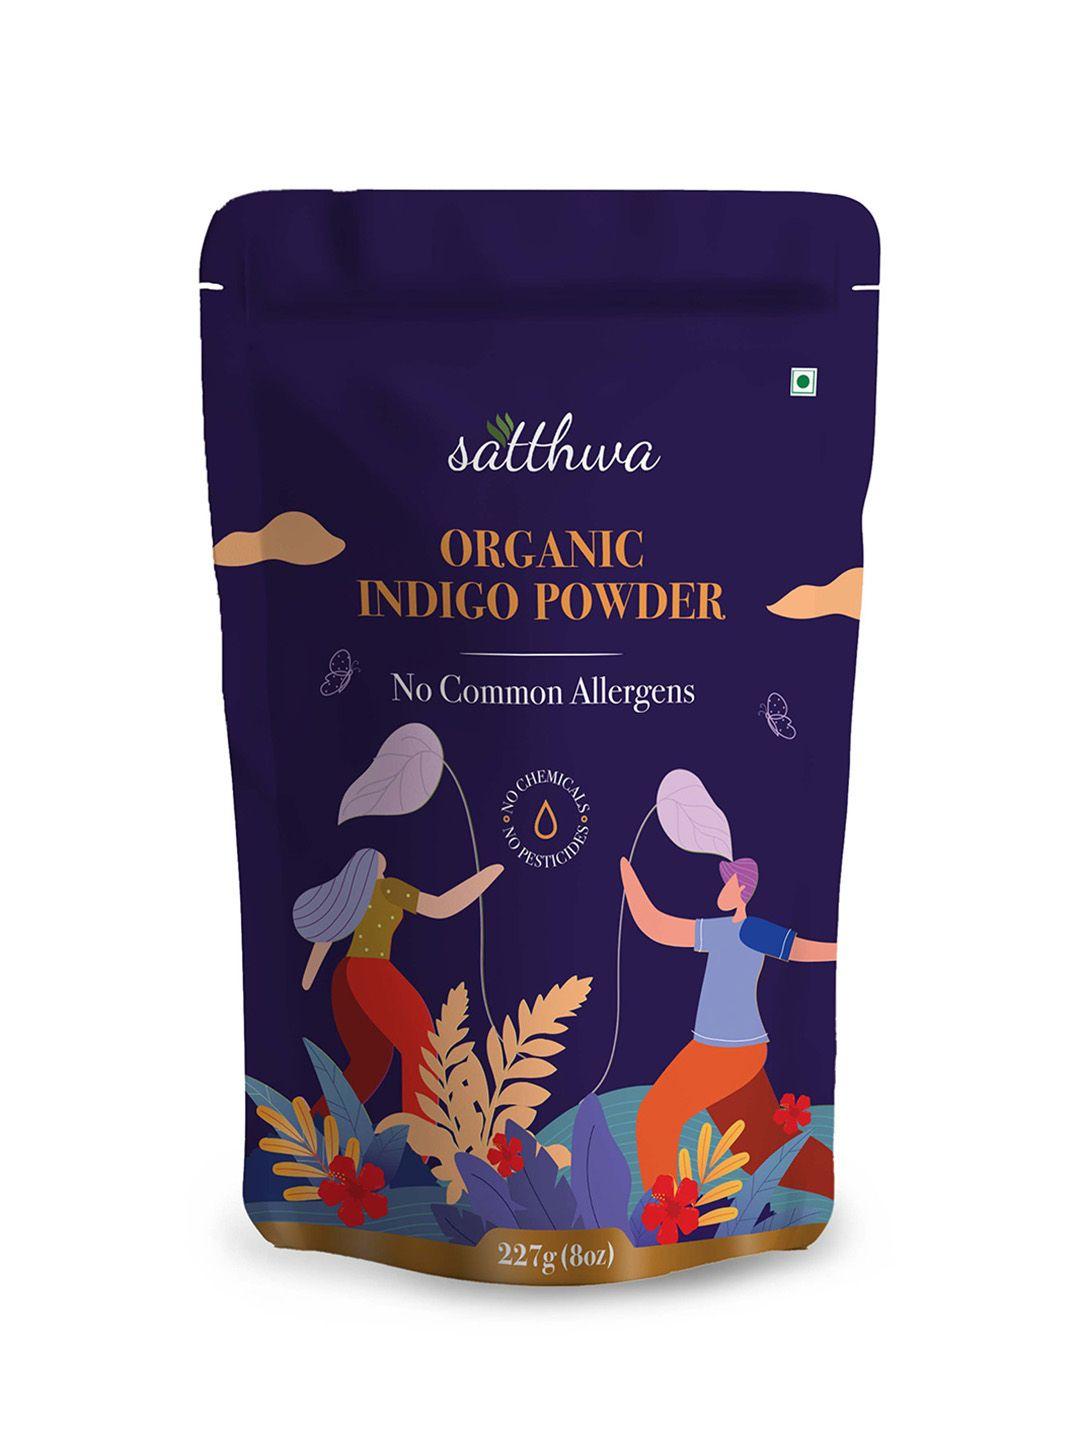 satthwa 100% pure & natural organic indigo powder 227gm - black